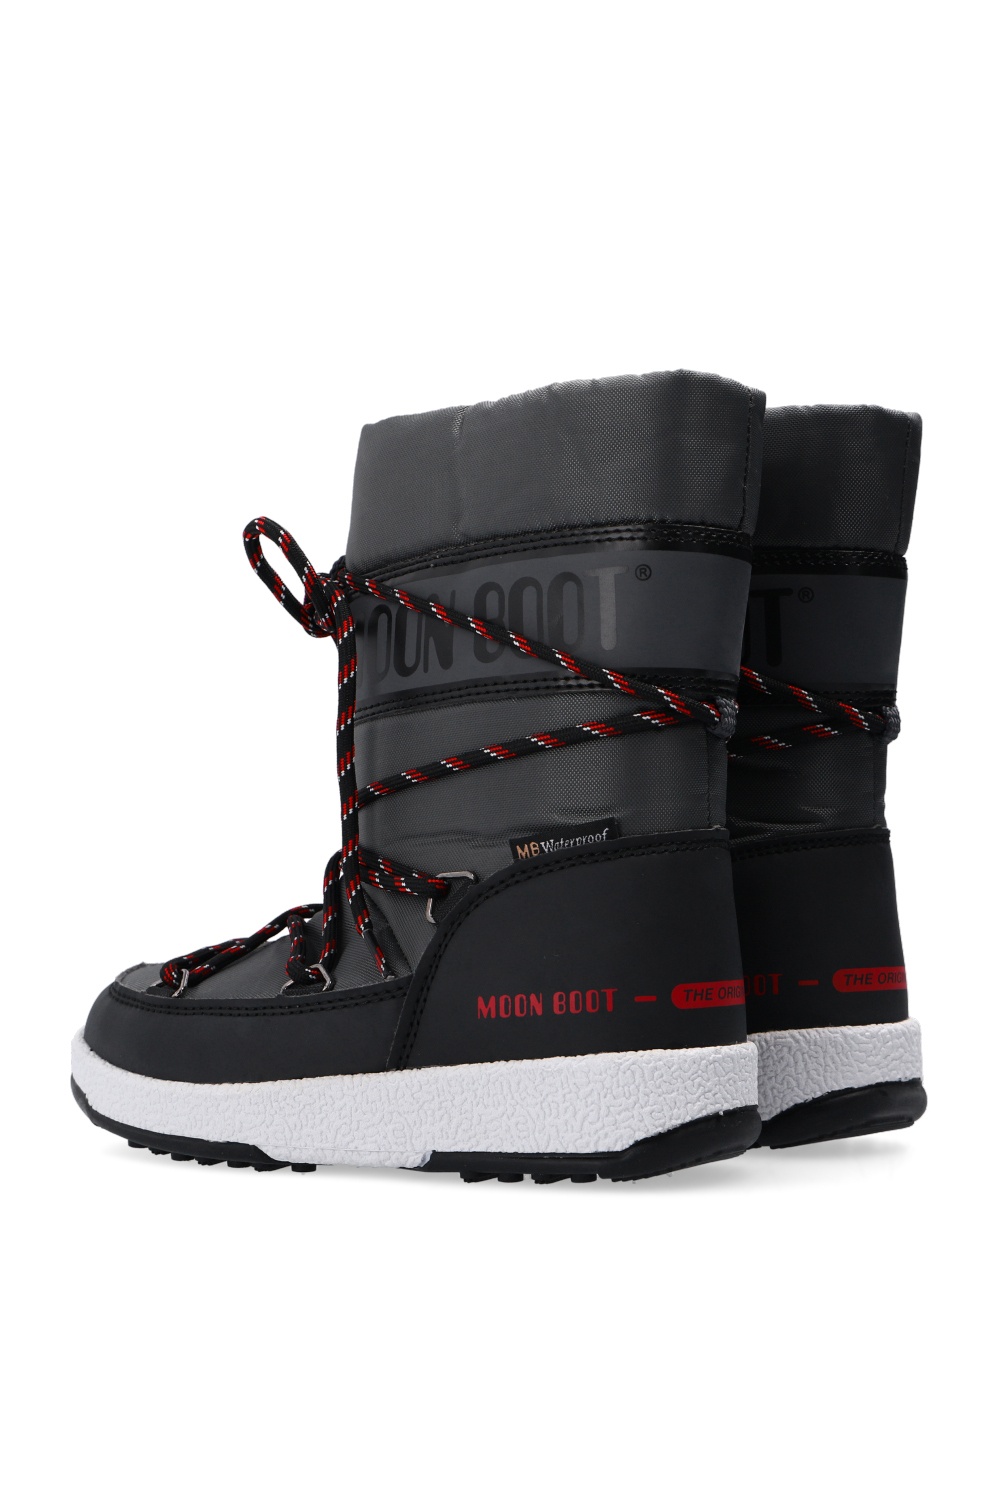 Сандалии adidas sandals black orange ‘JR Boy’ snow boots